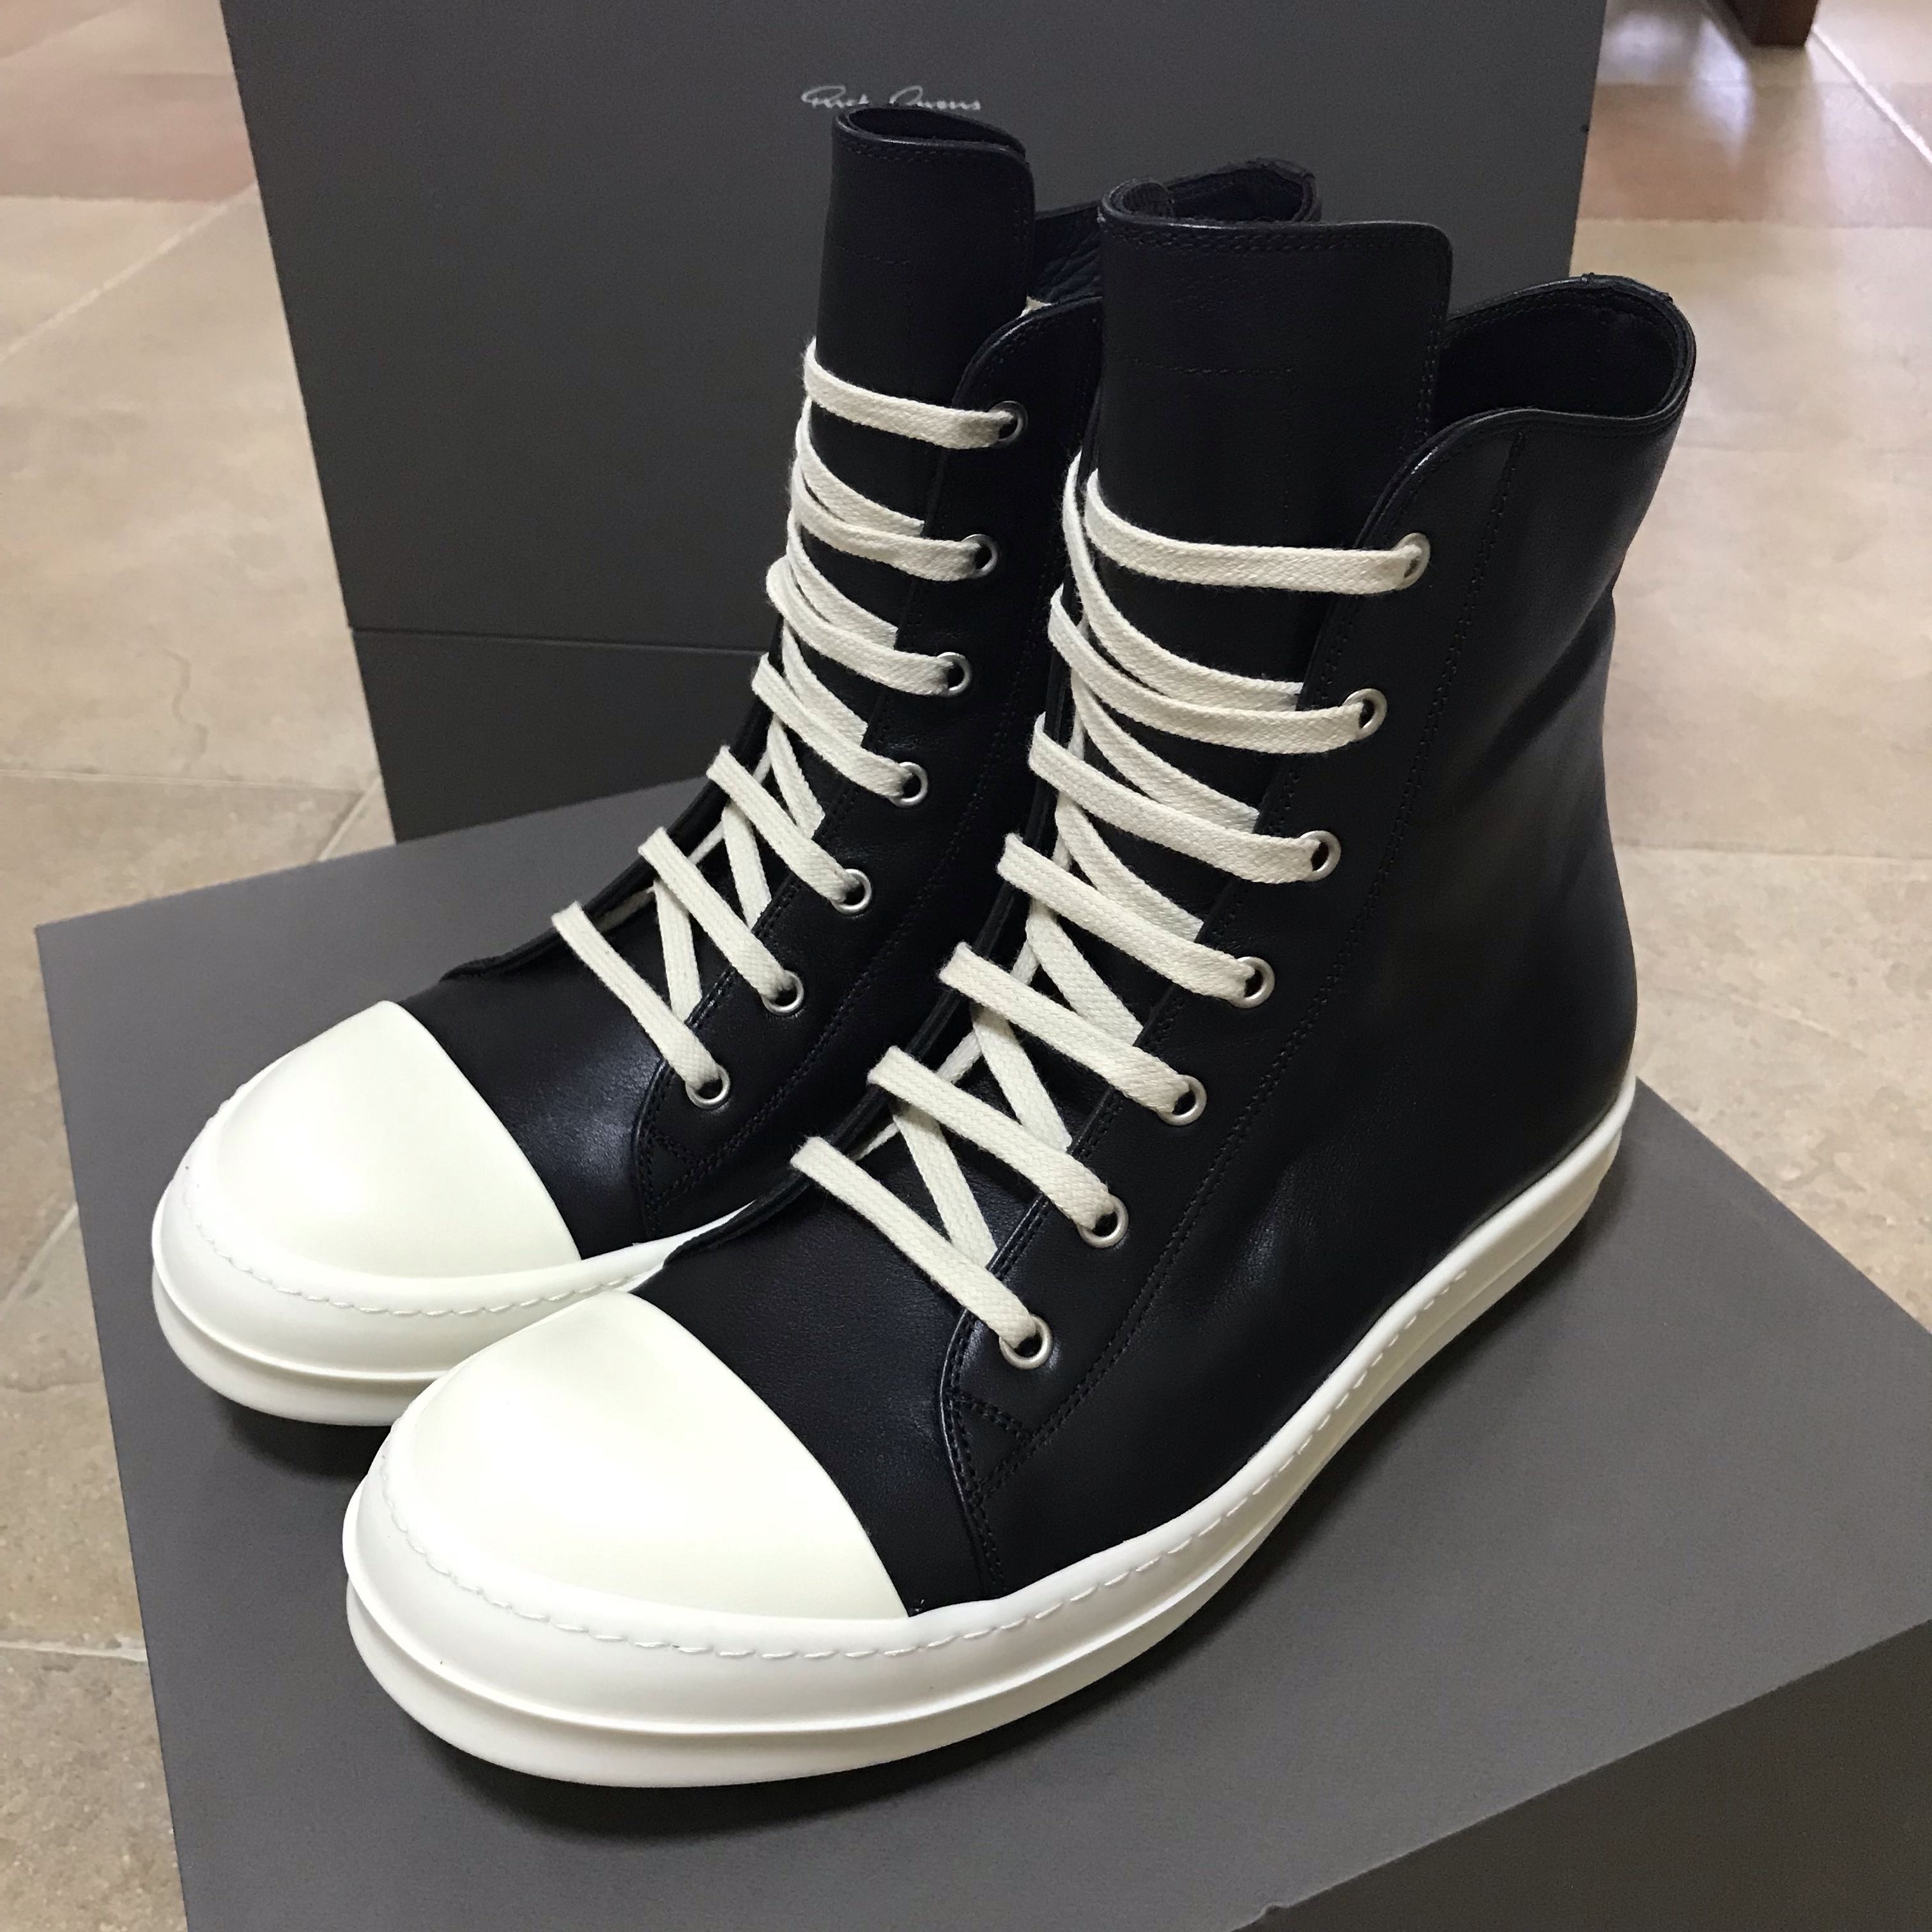 Rick Owens Ramones Low (Mainline), Men's Fashion, Footwear